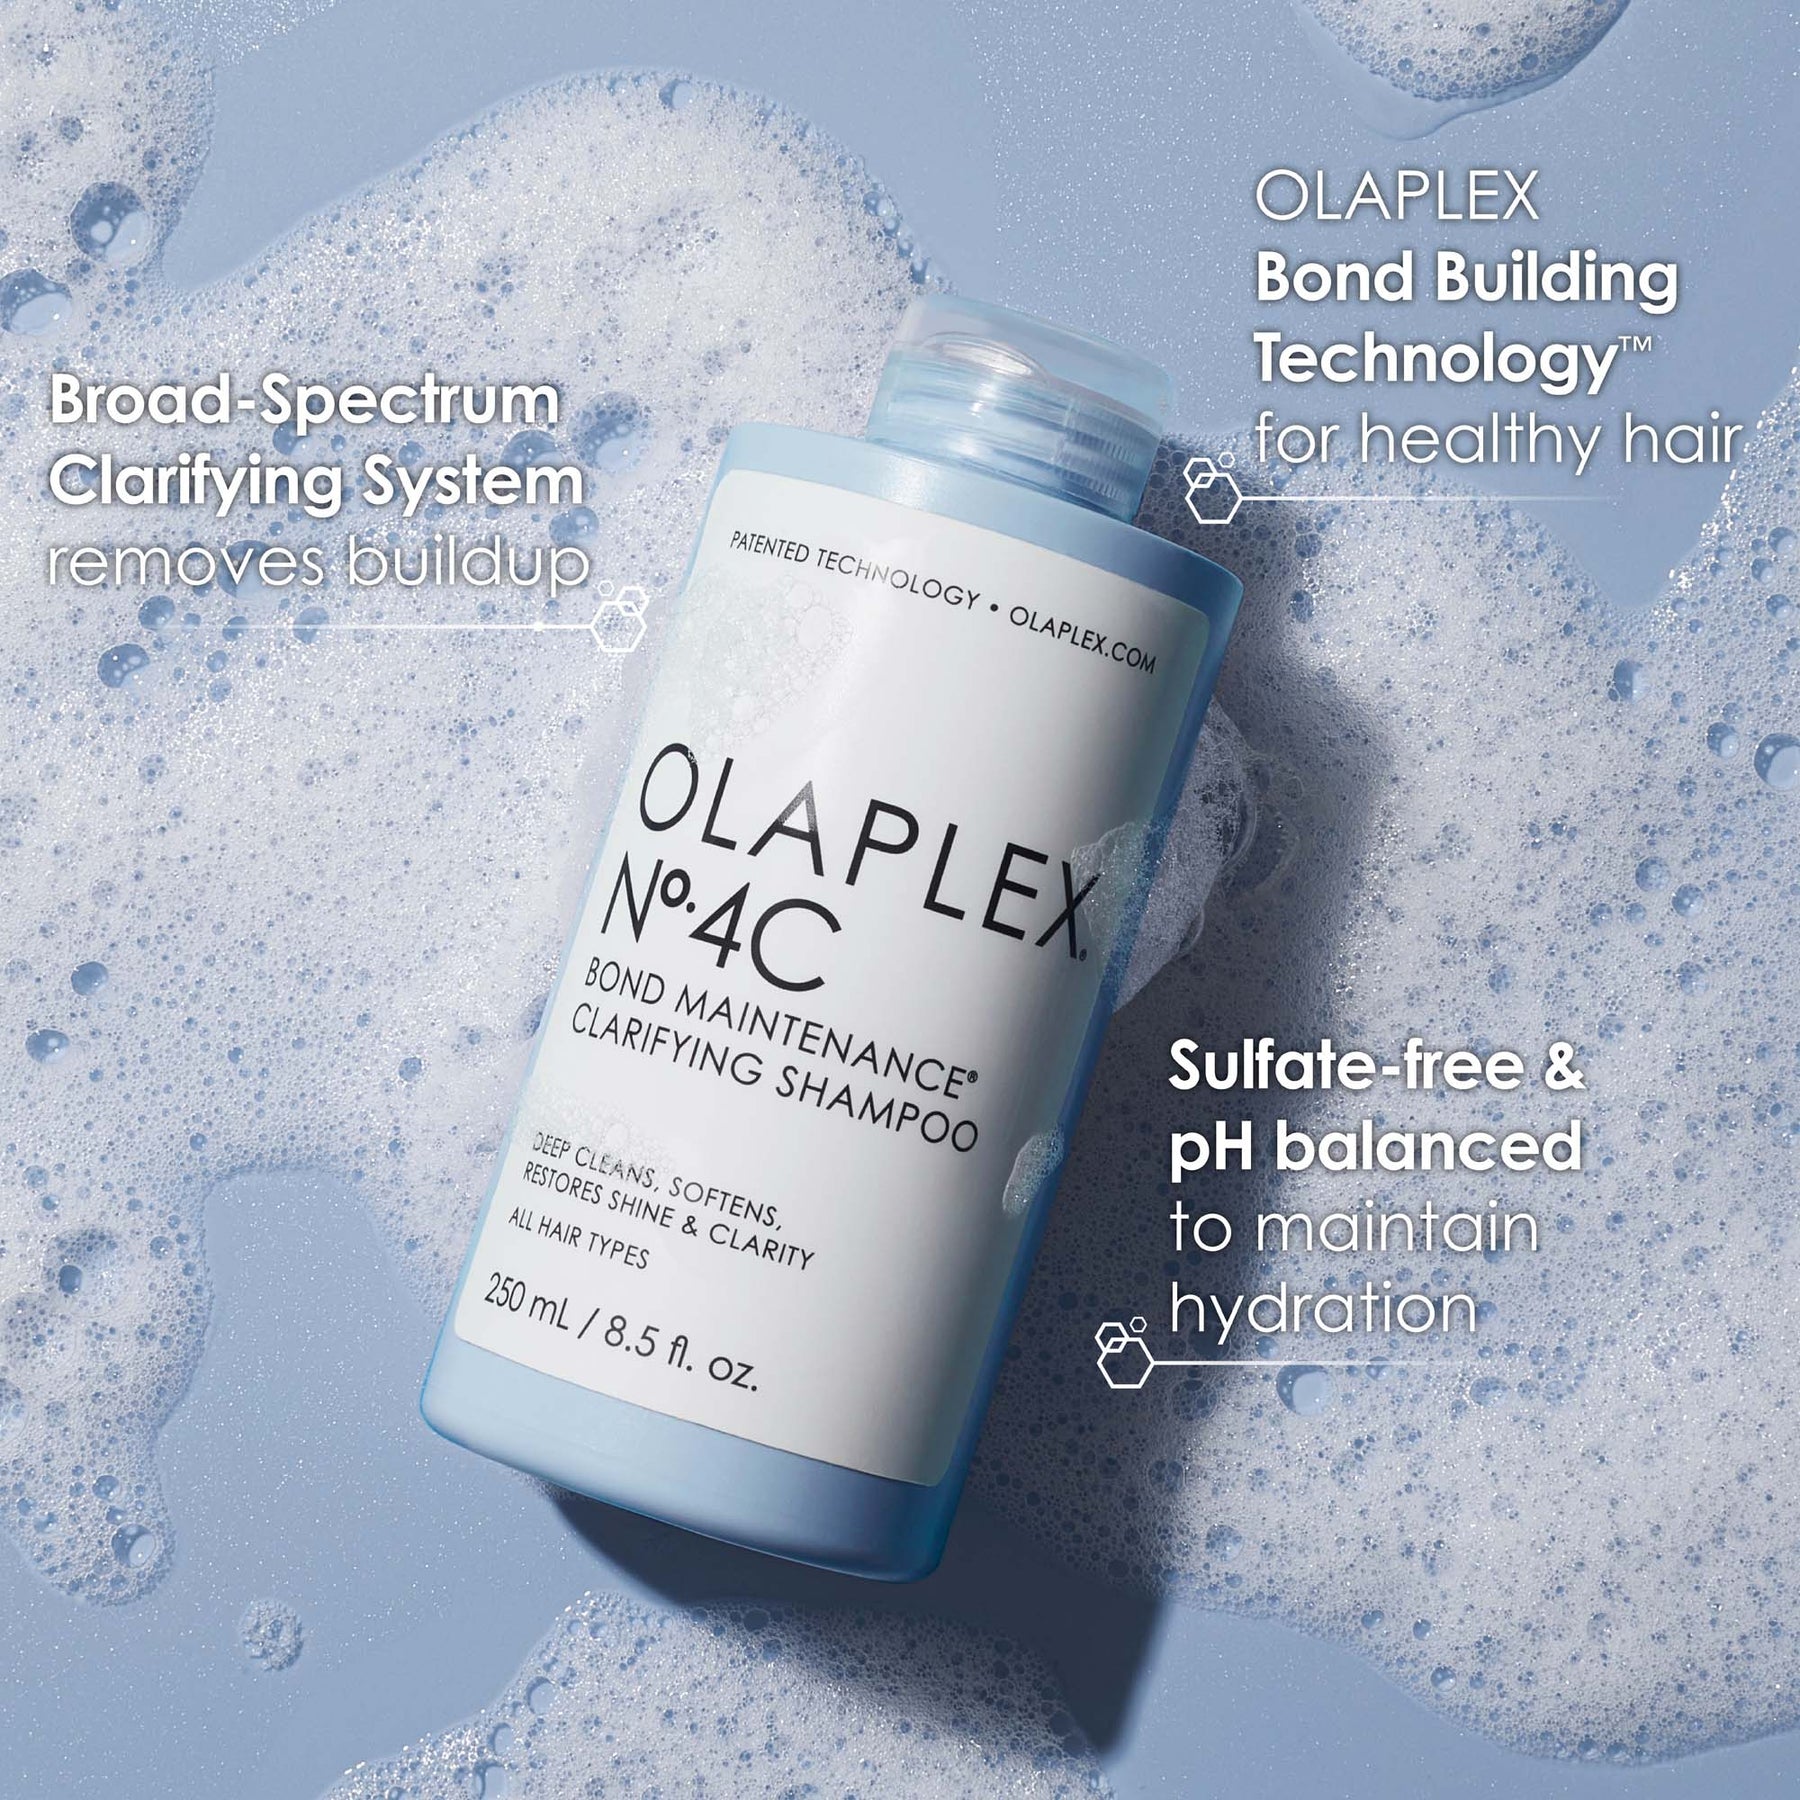 Olaplex Nº4C Bond Maintenance® Clarifying Shampoo - Blend Box